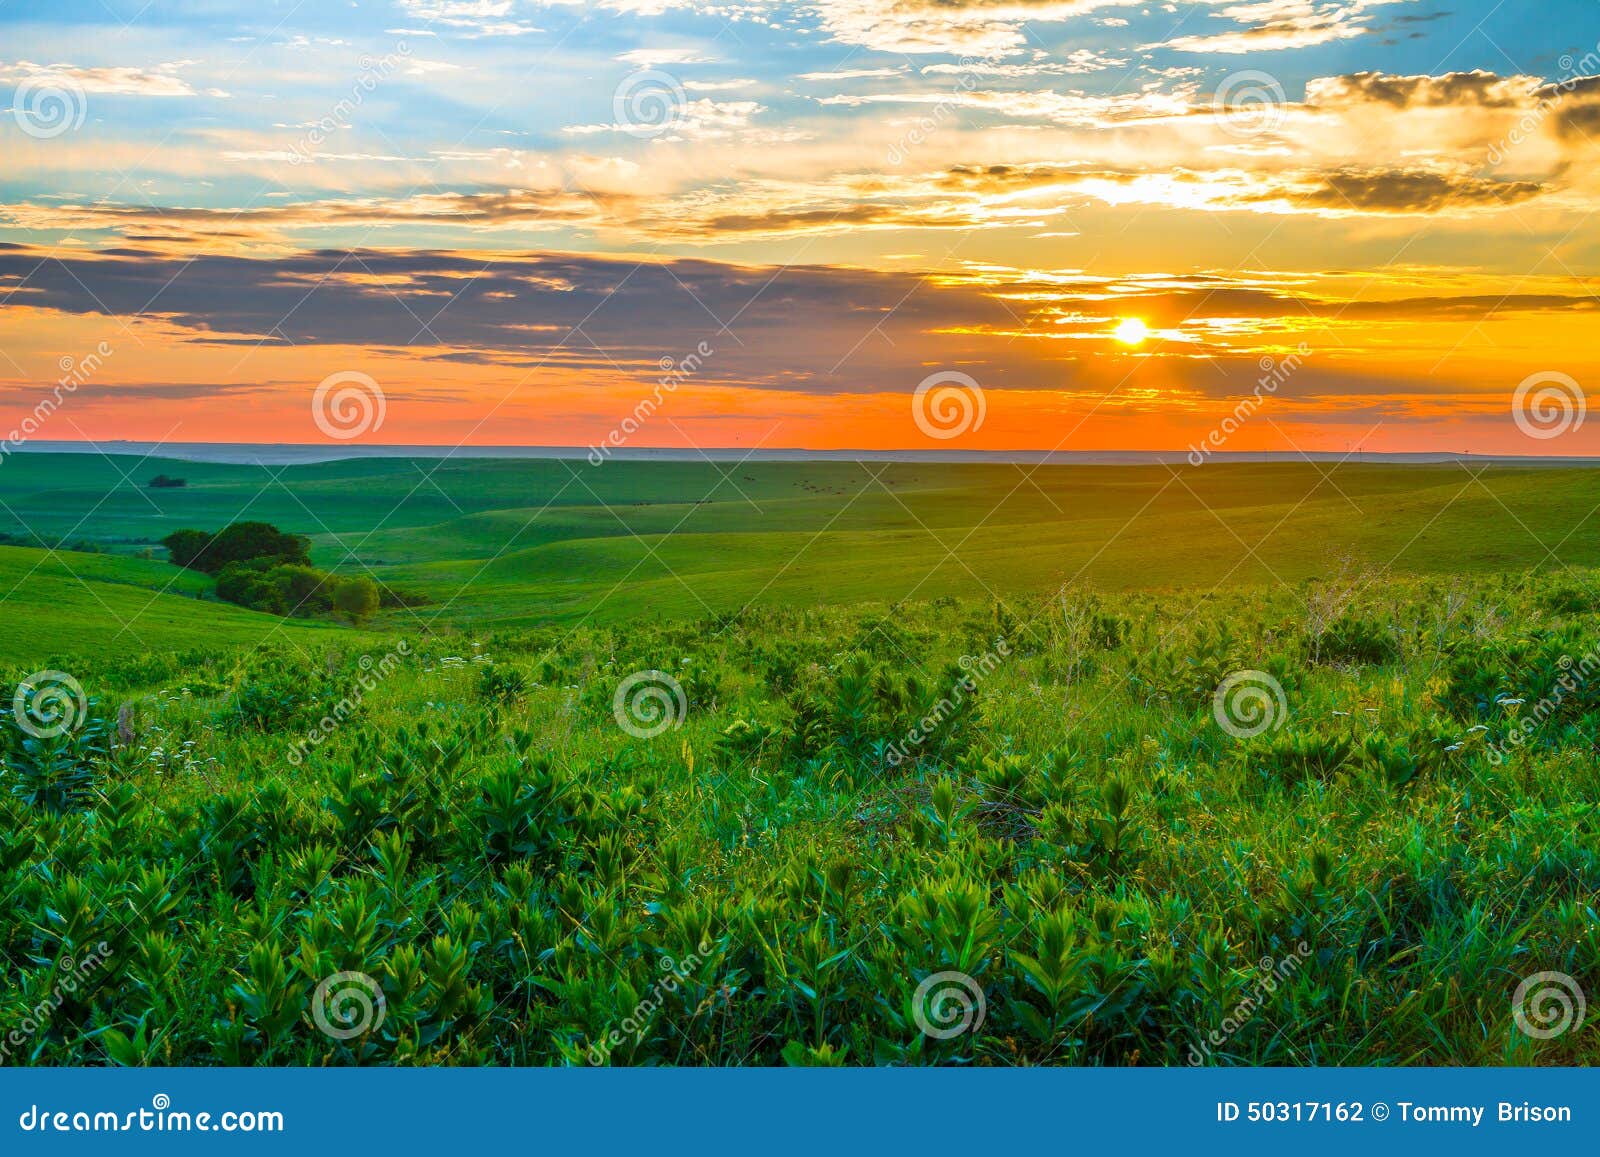 kansas sunset in the flint hills